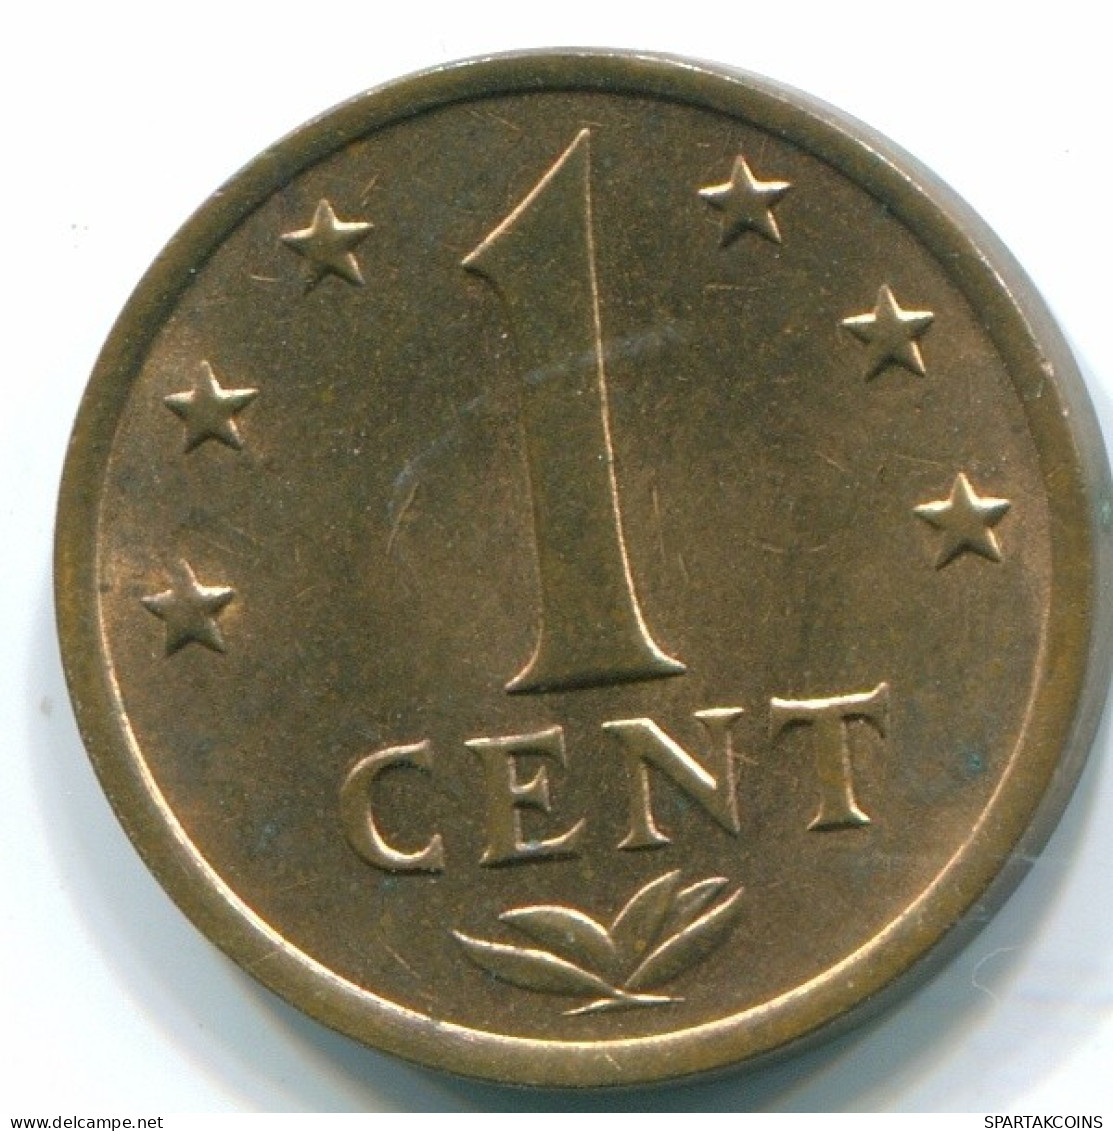 1 CENT 1971 NIEDERLÄNDISCHE ANTILLEN Bronze Koloniale Münze #S10608.D.A - Netherlands Antilles